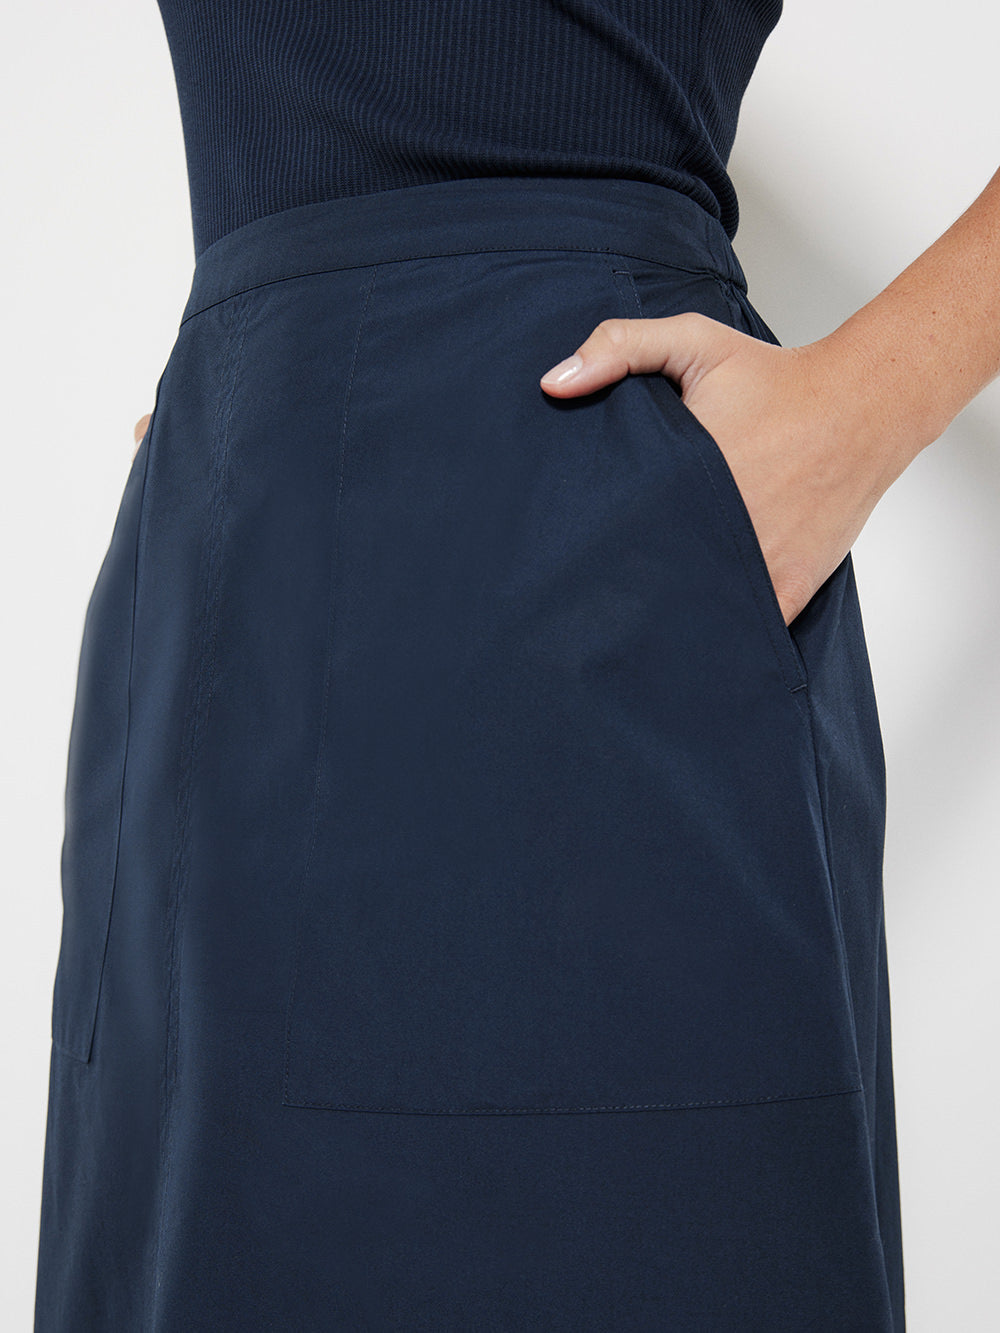 The Cotton Poplin A-Line Skirt